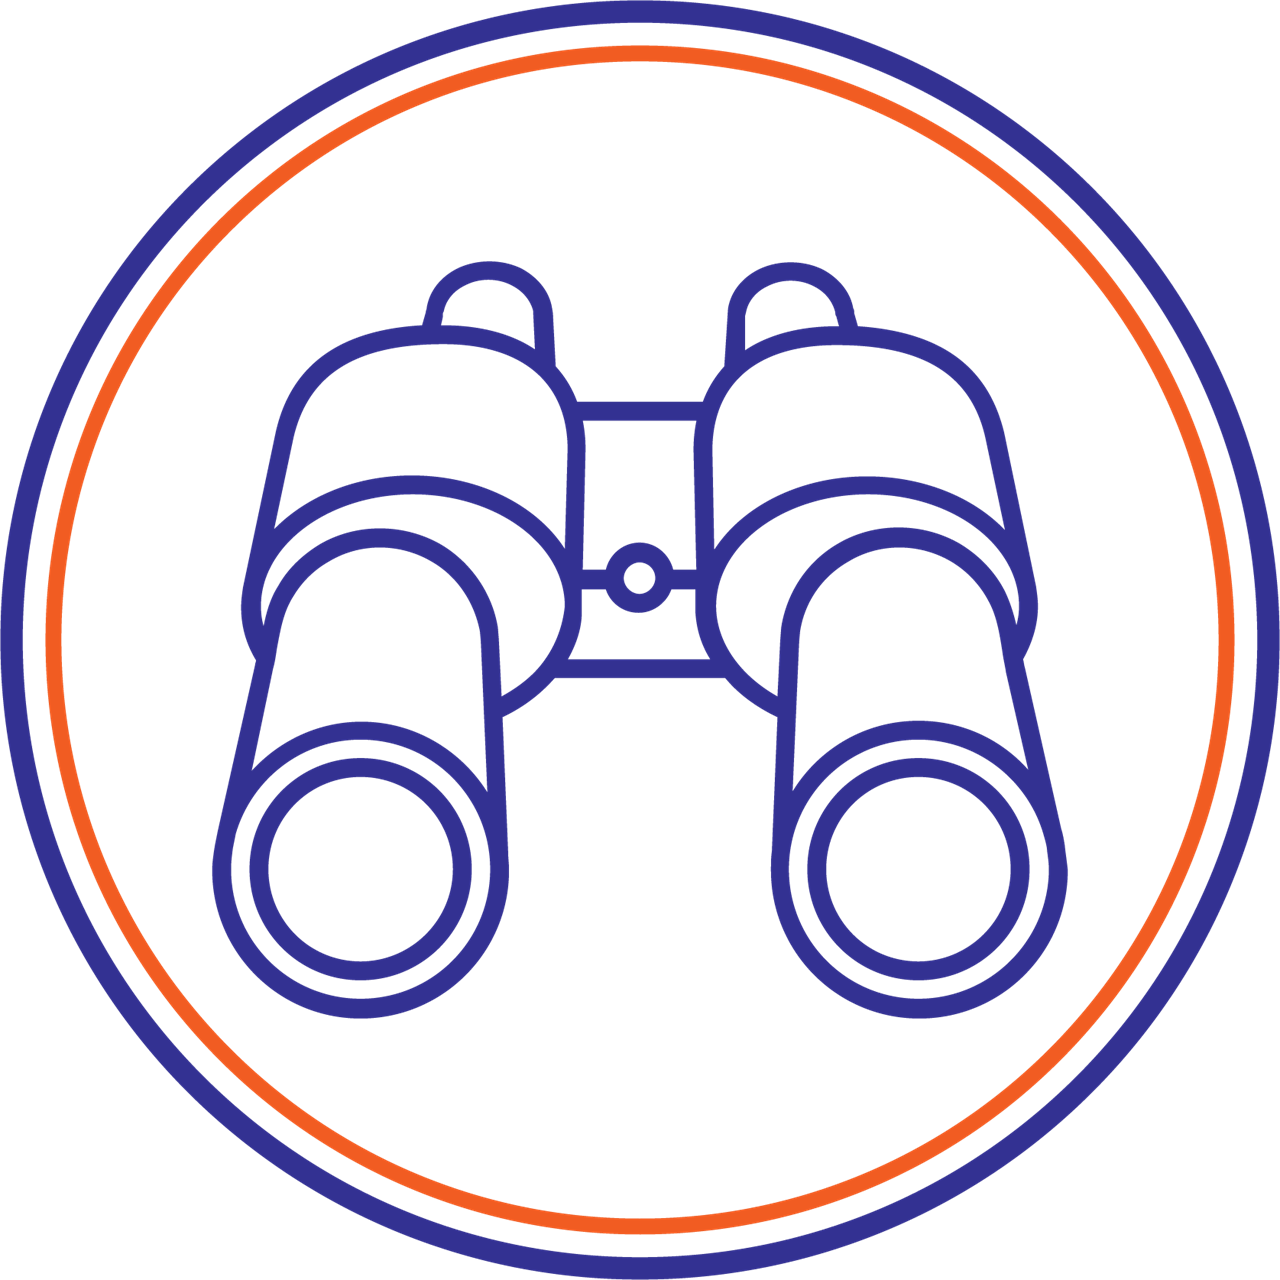 A Logo Of Binoculars In A Circle